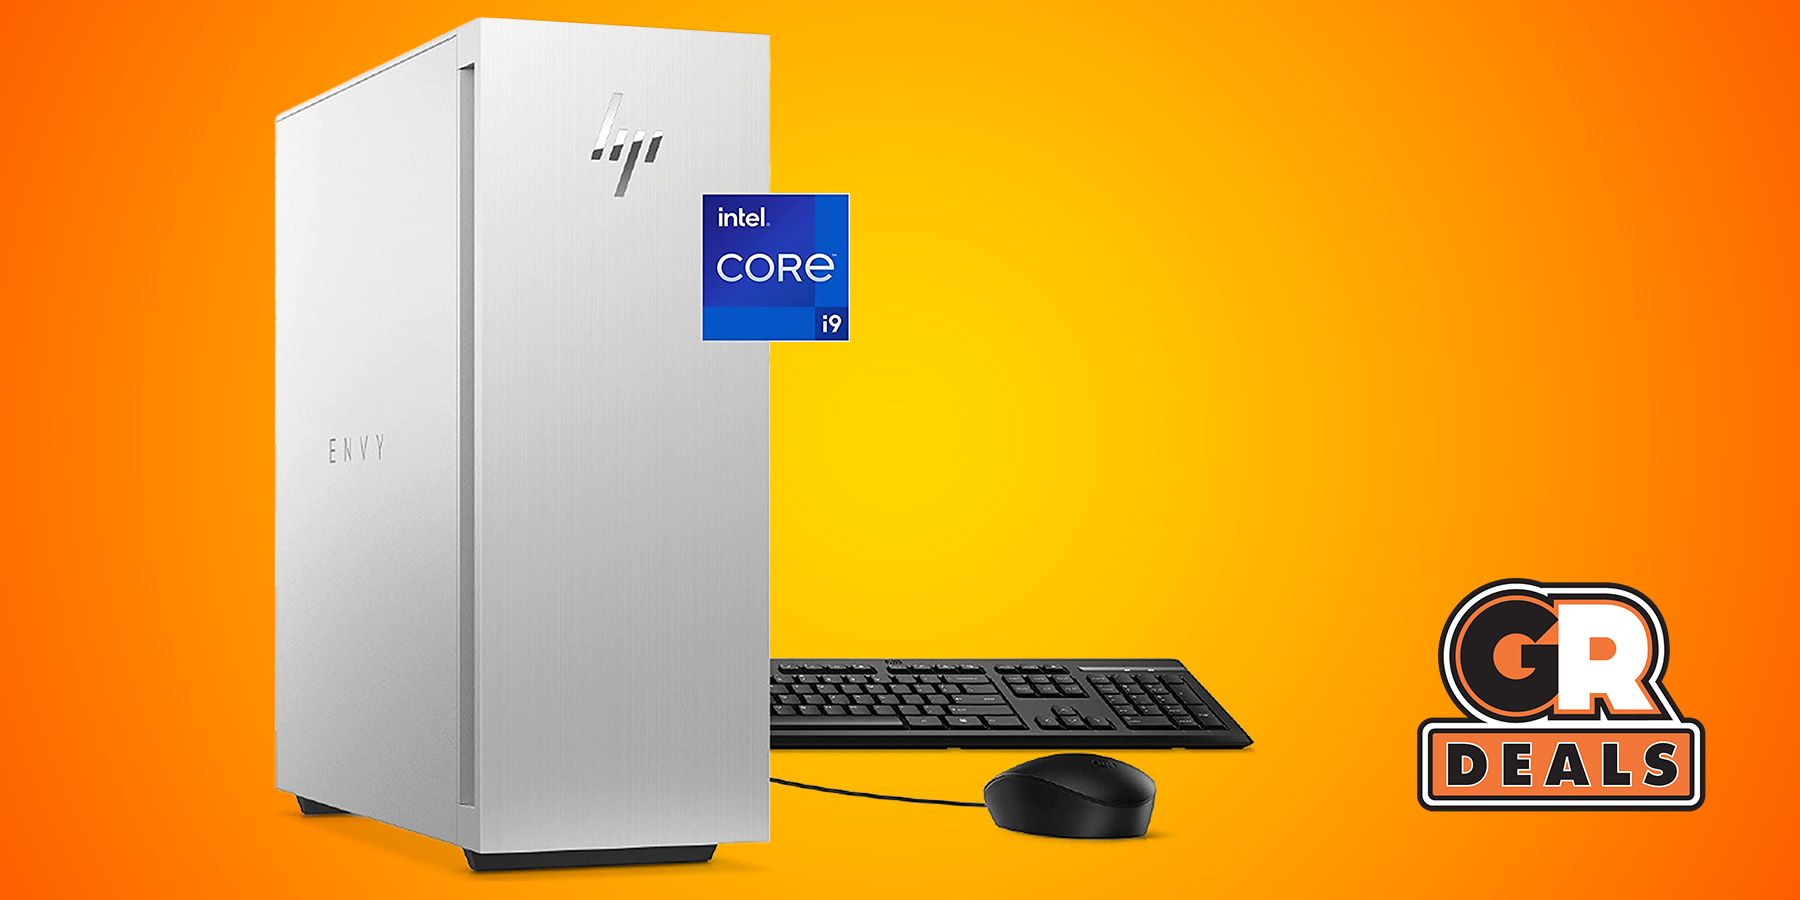 Save $470 on HP Envy TE02-0042 Desktop Computer Now